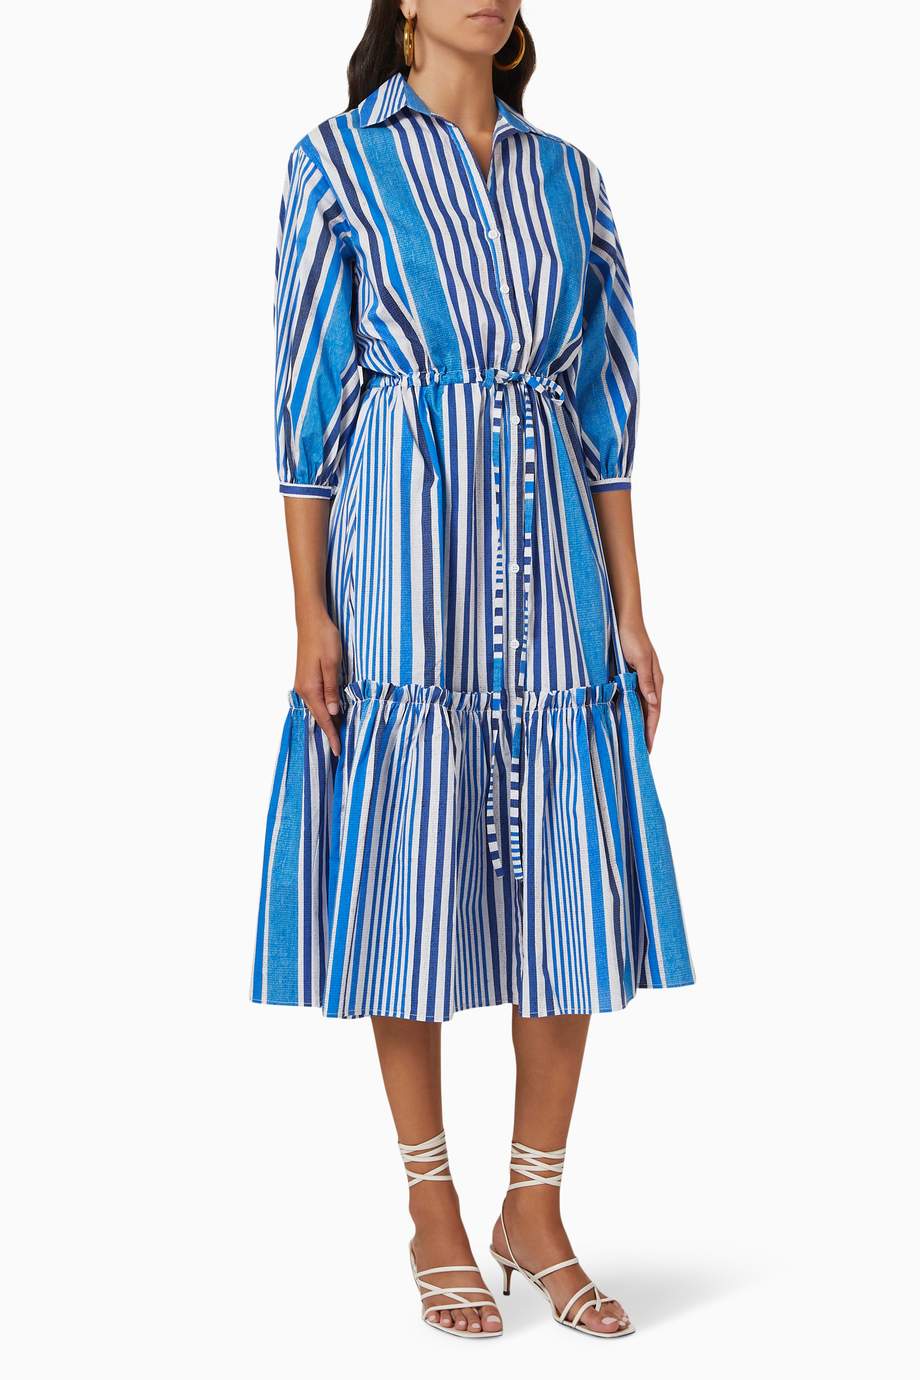 Shop Cara Cara Blue Hutton Dress in Cotton for Women | Ounass UAE